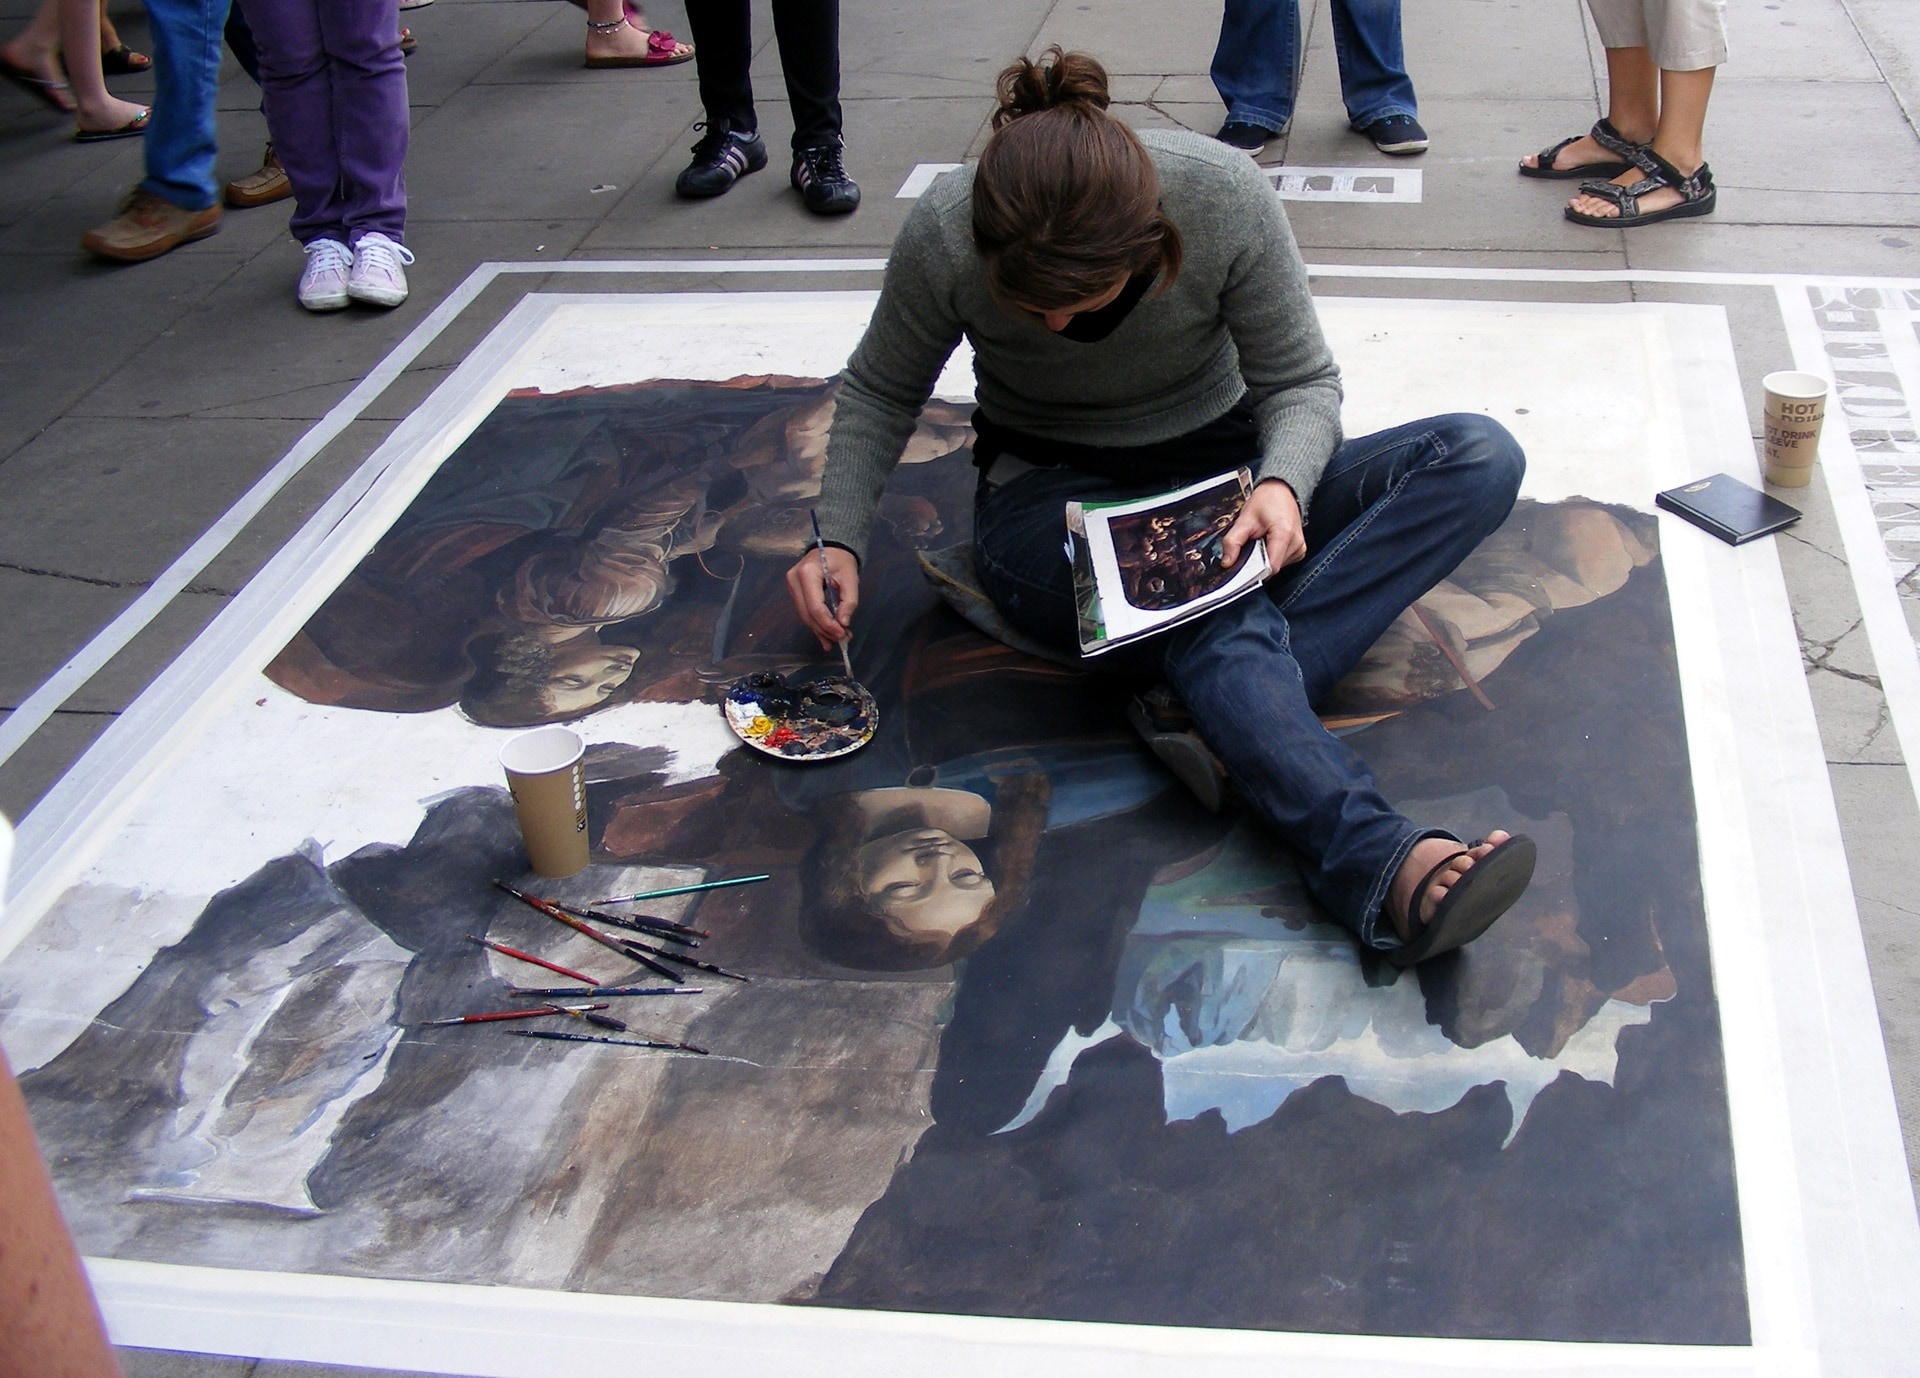 man wearing gray long sleeve shirt painting on floor